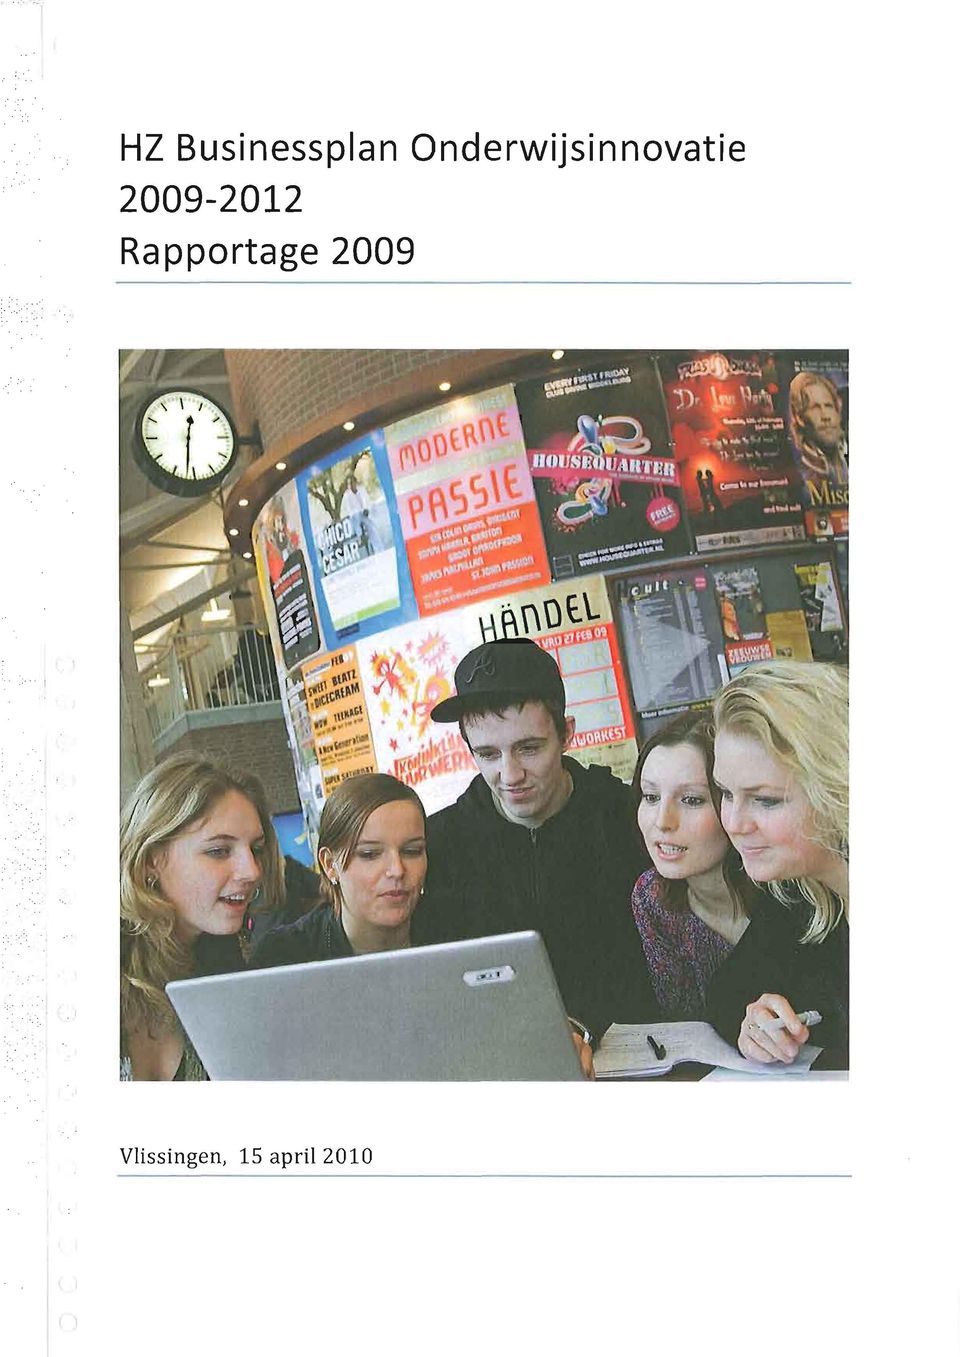 2009-2012 Rapportage